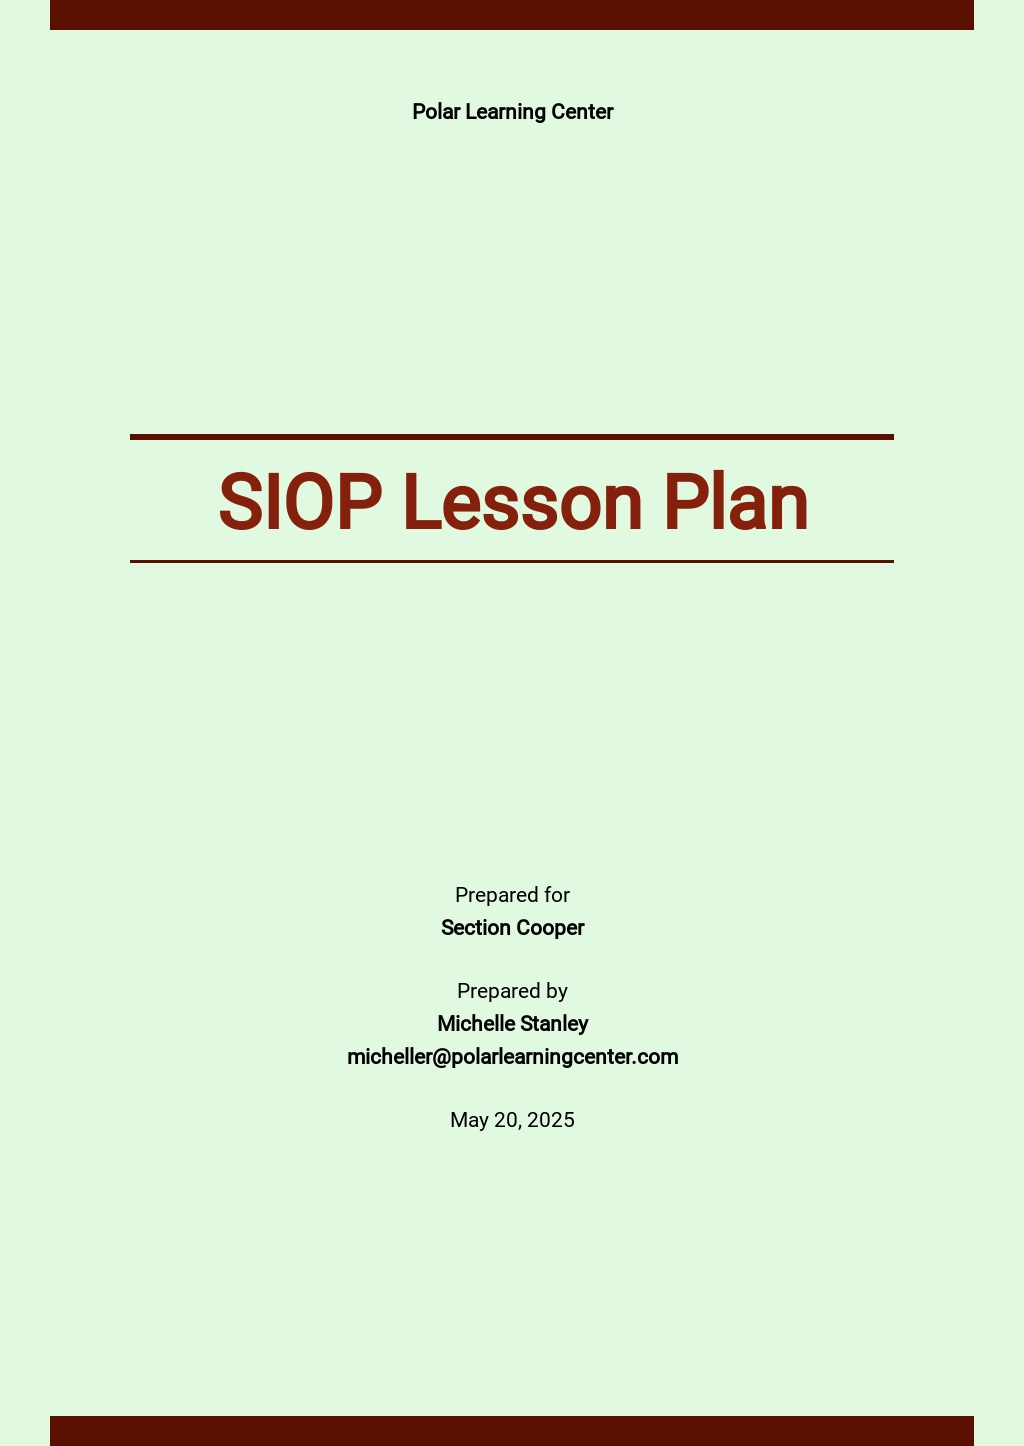 Sample SIOP Lesson Plan Template.jpe